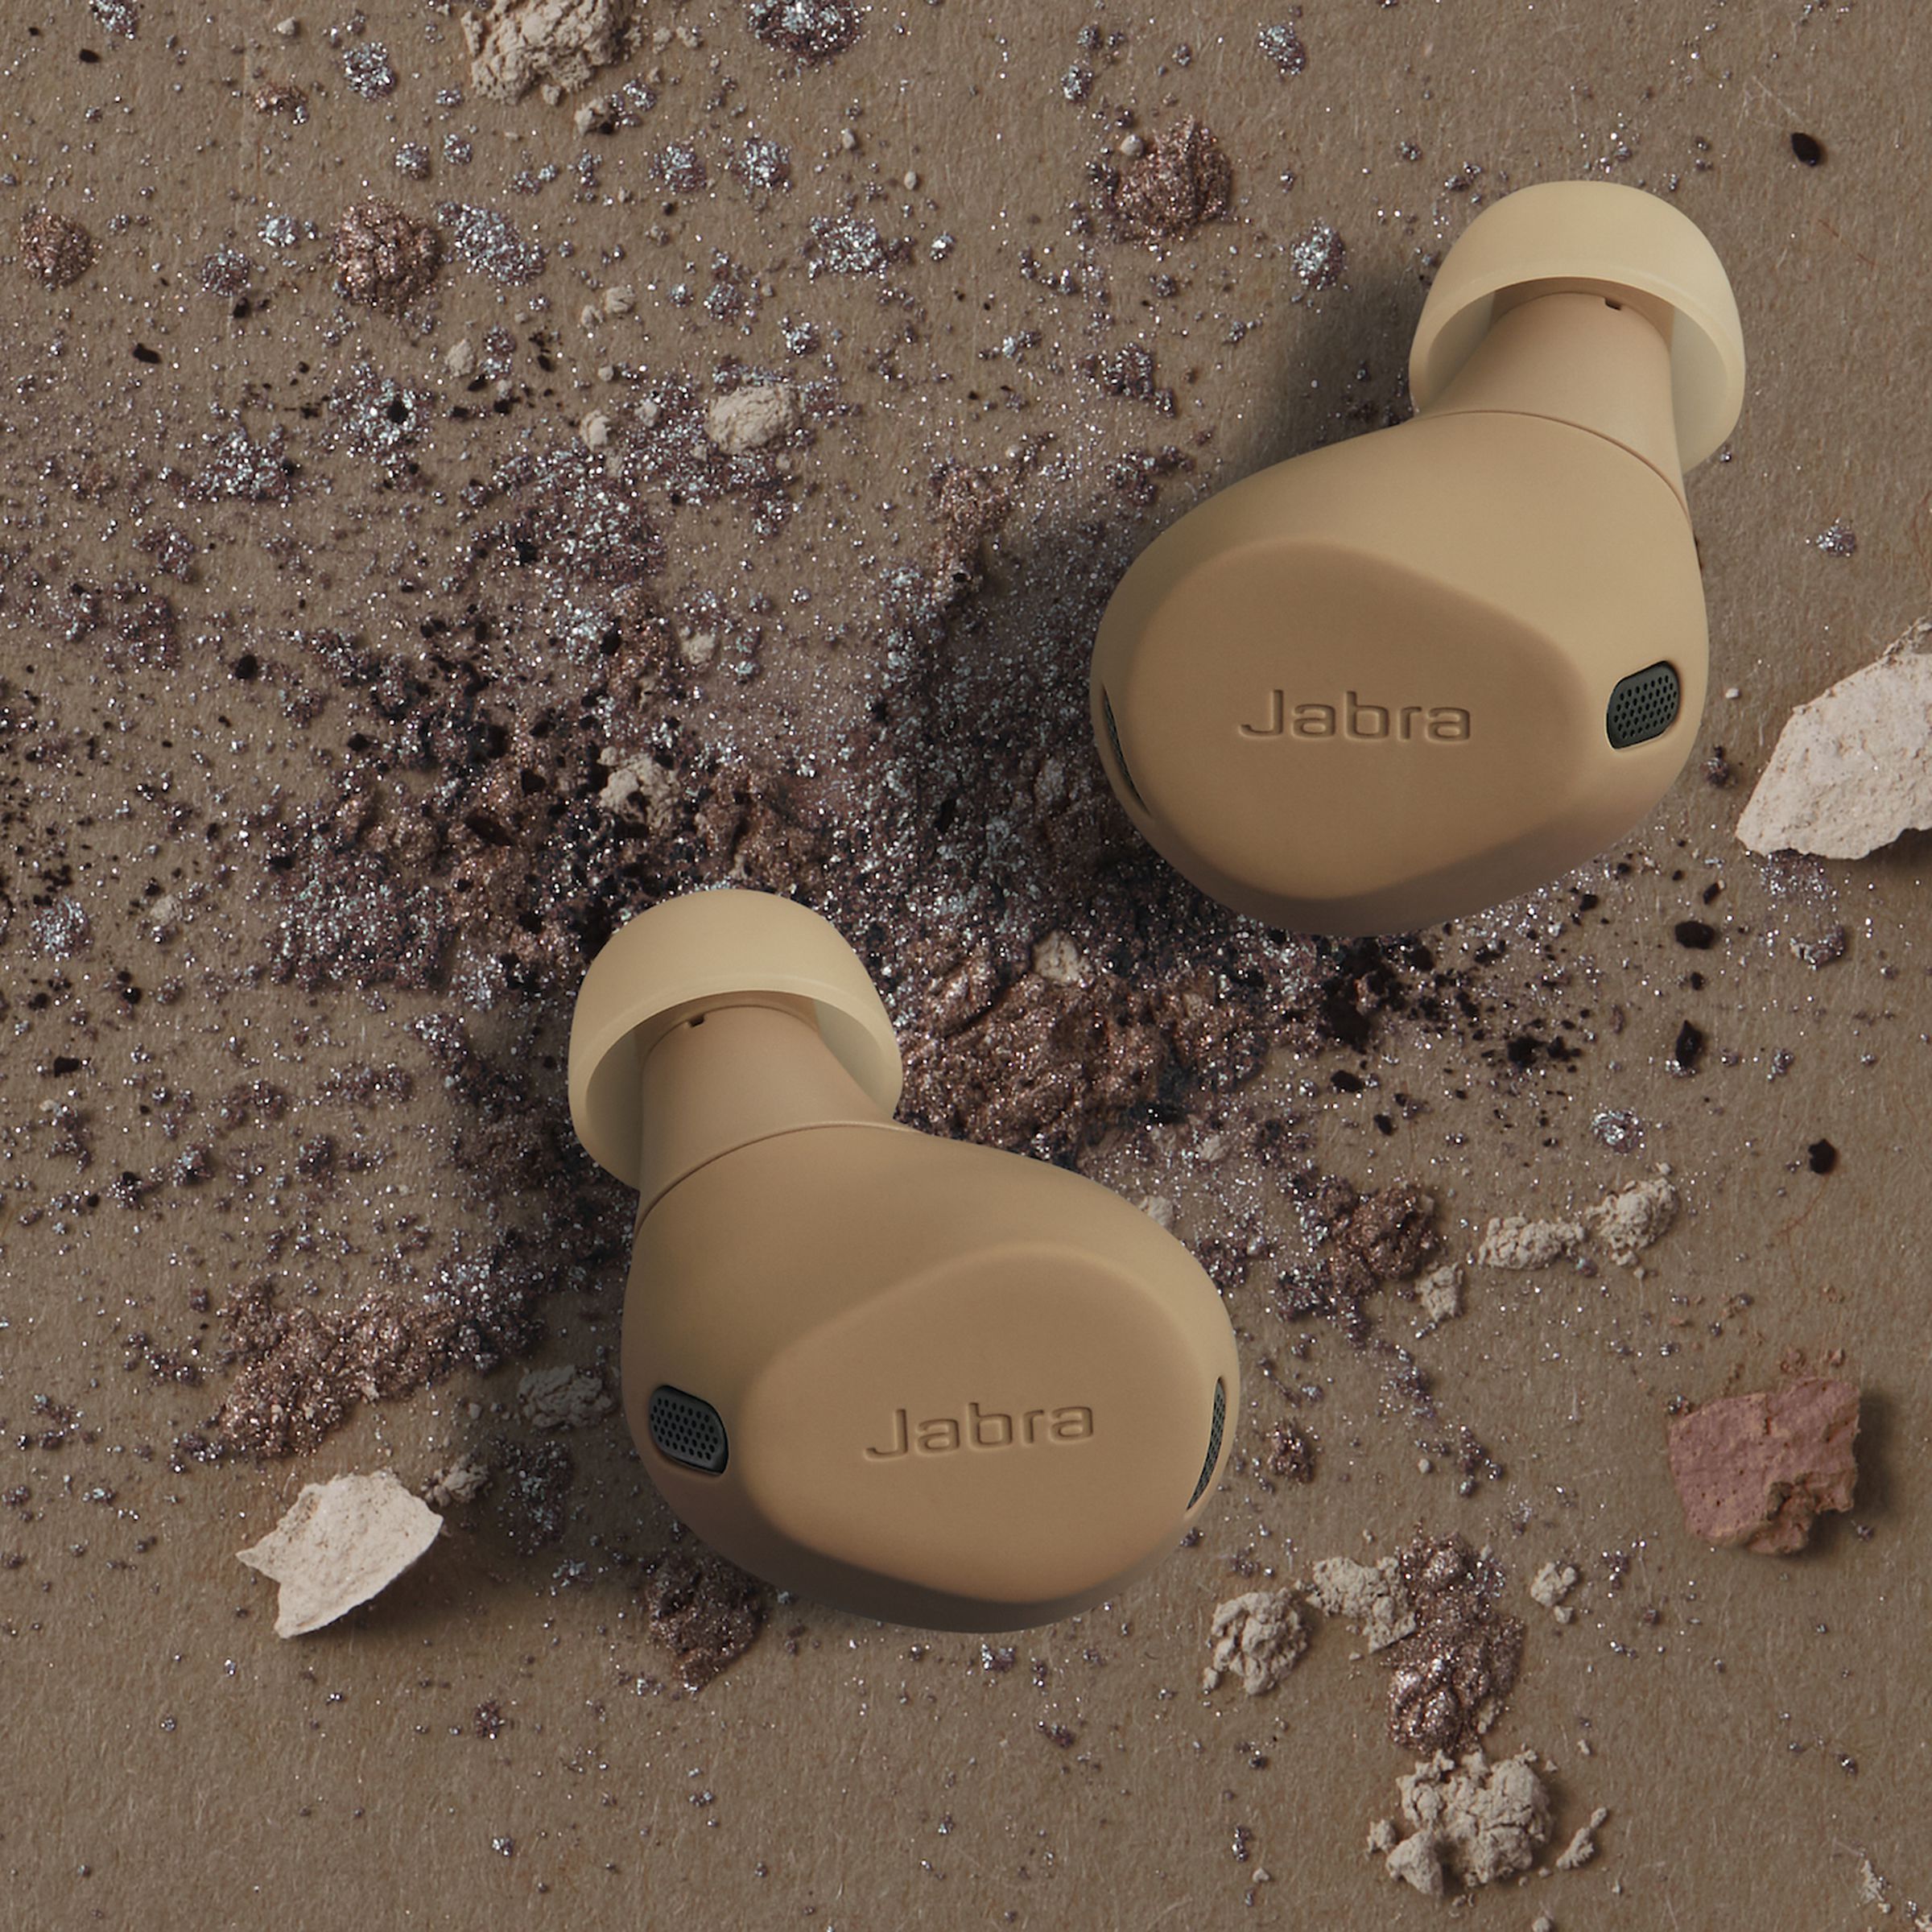 A marketing image of Jabra’s Elite 8 Active earbuds.